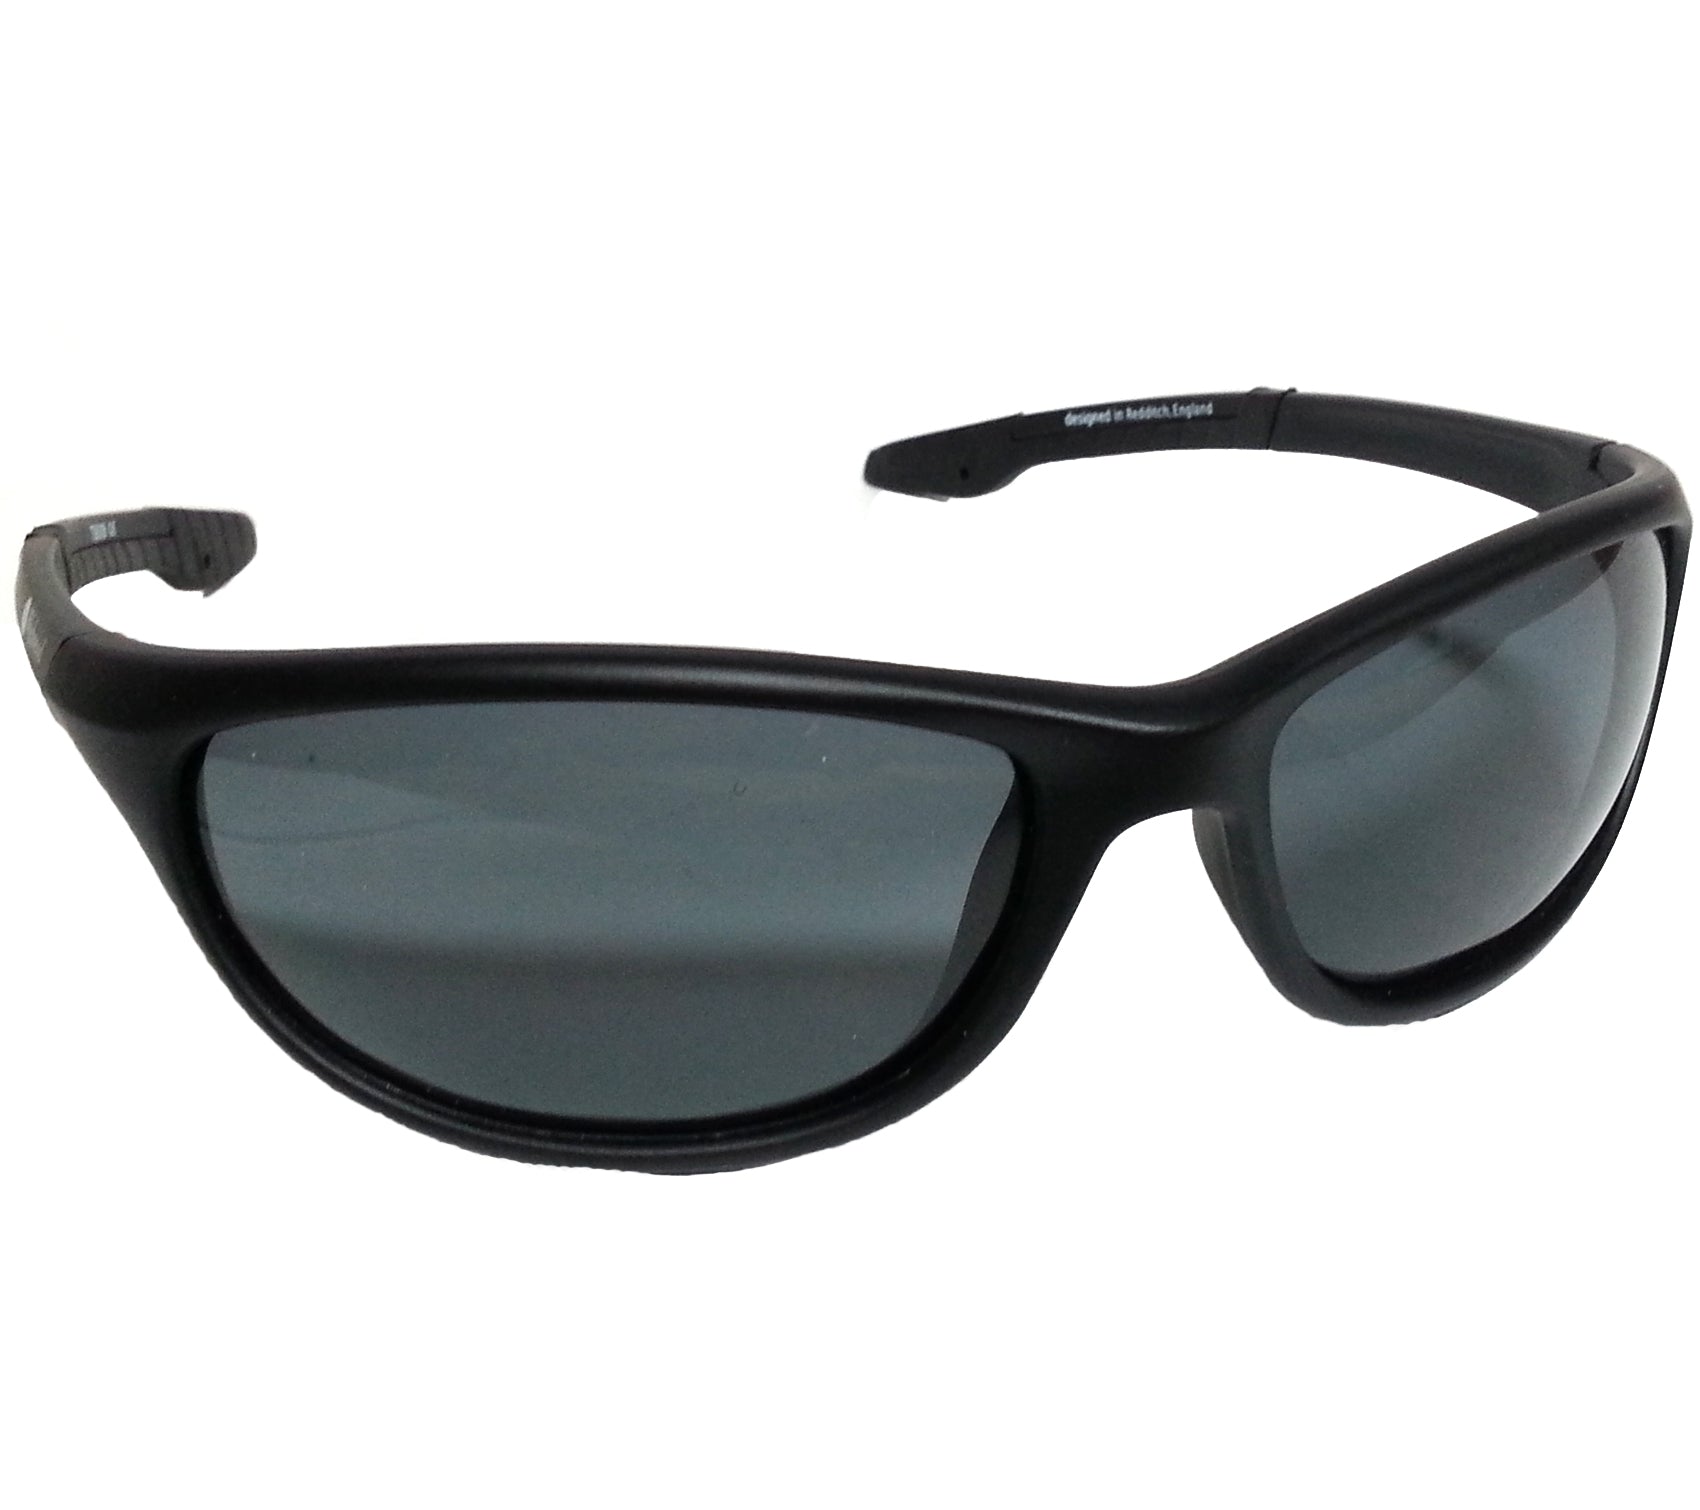 Wychwood Sunglasses